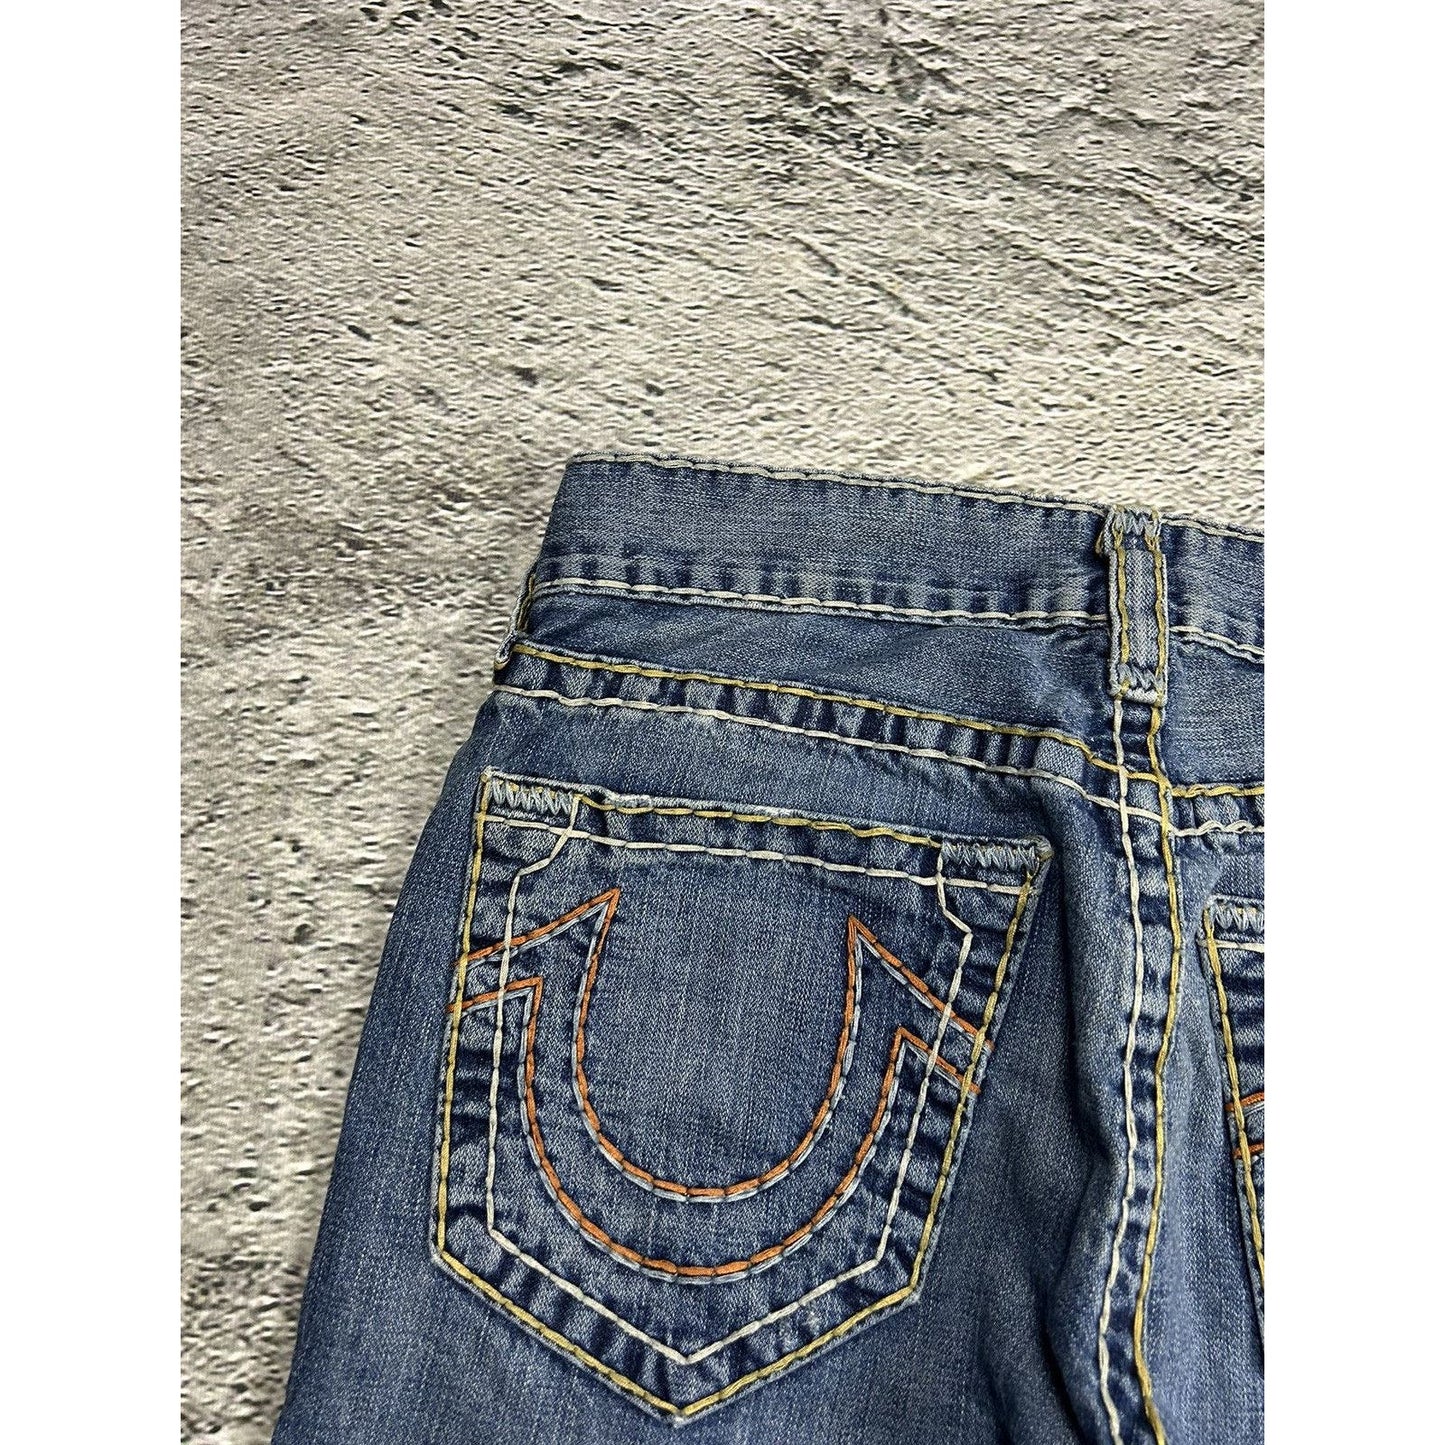 True Religion vintage jeans blue white thick stitching Y2K